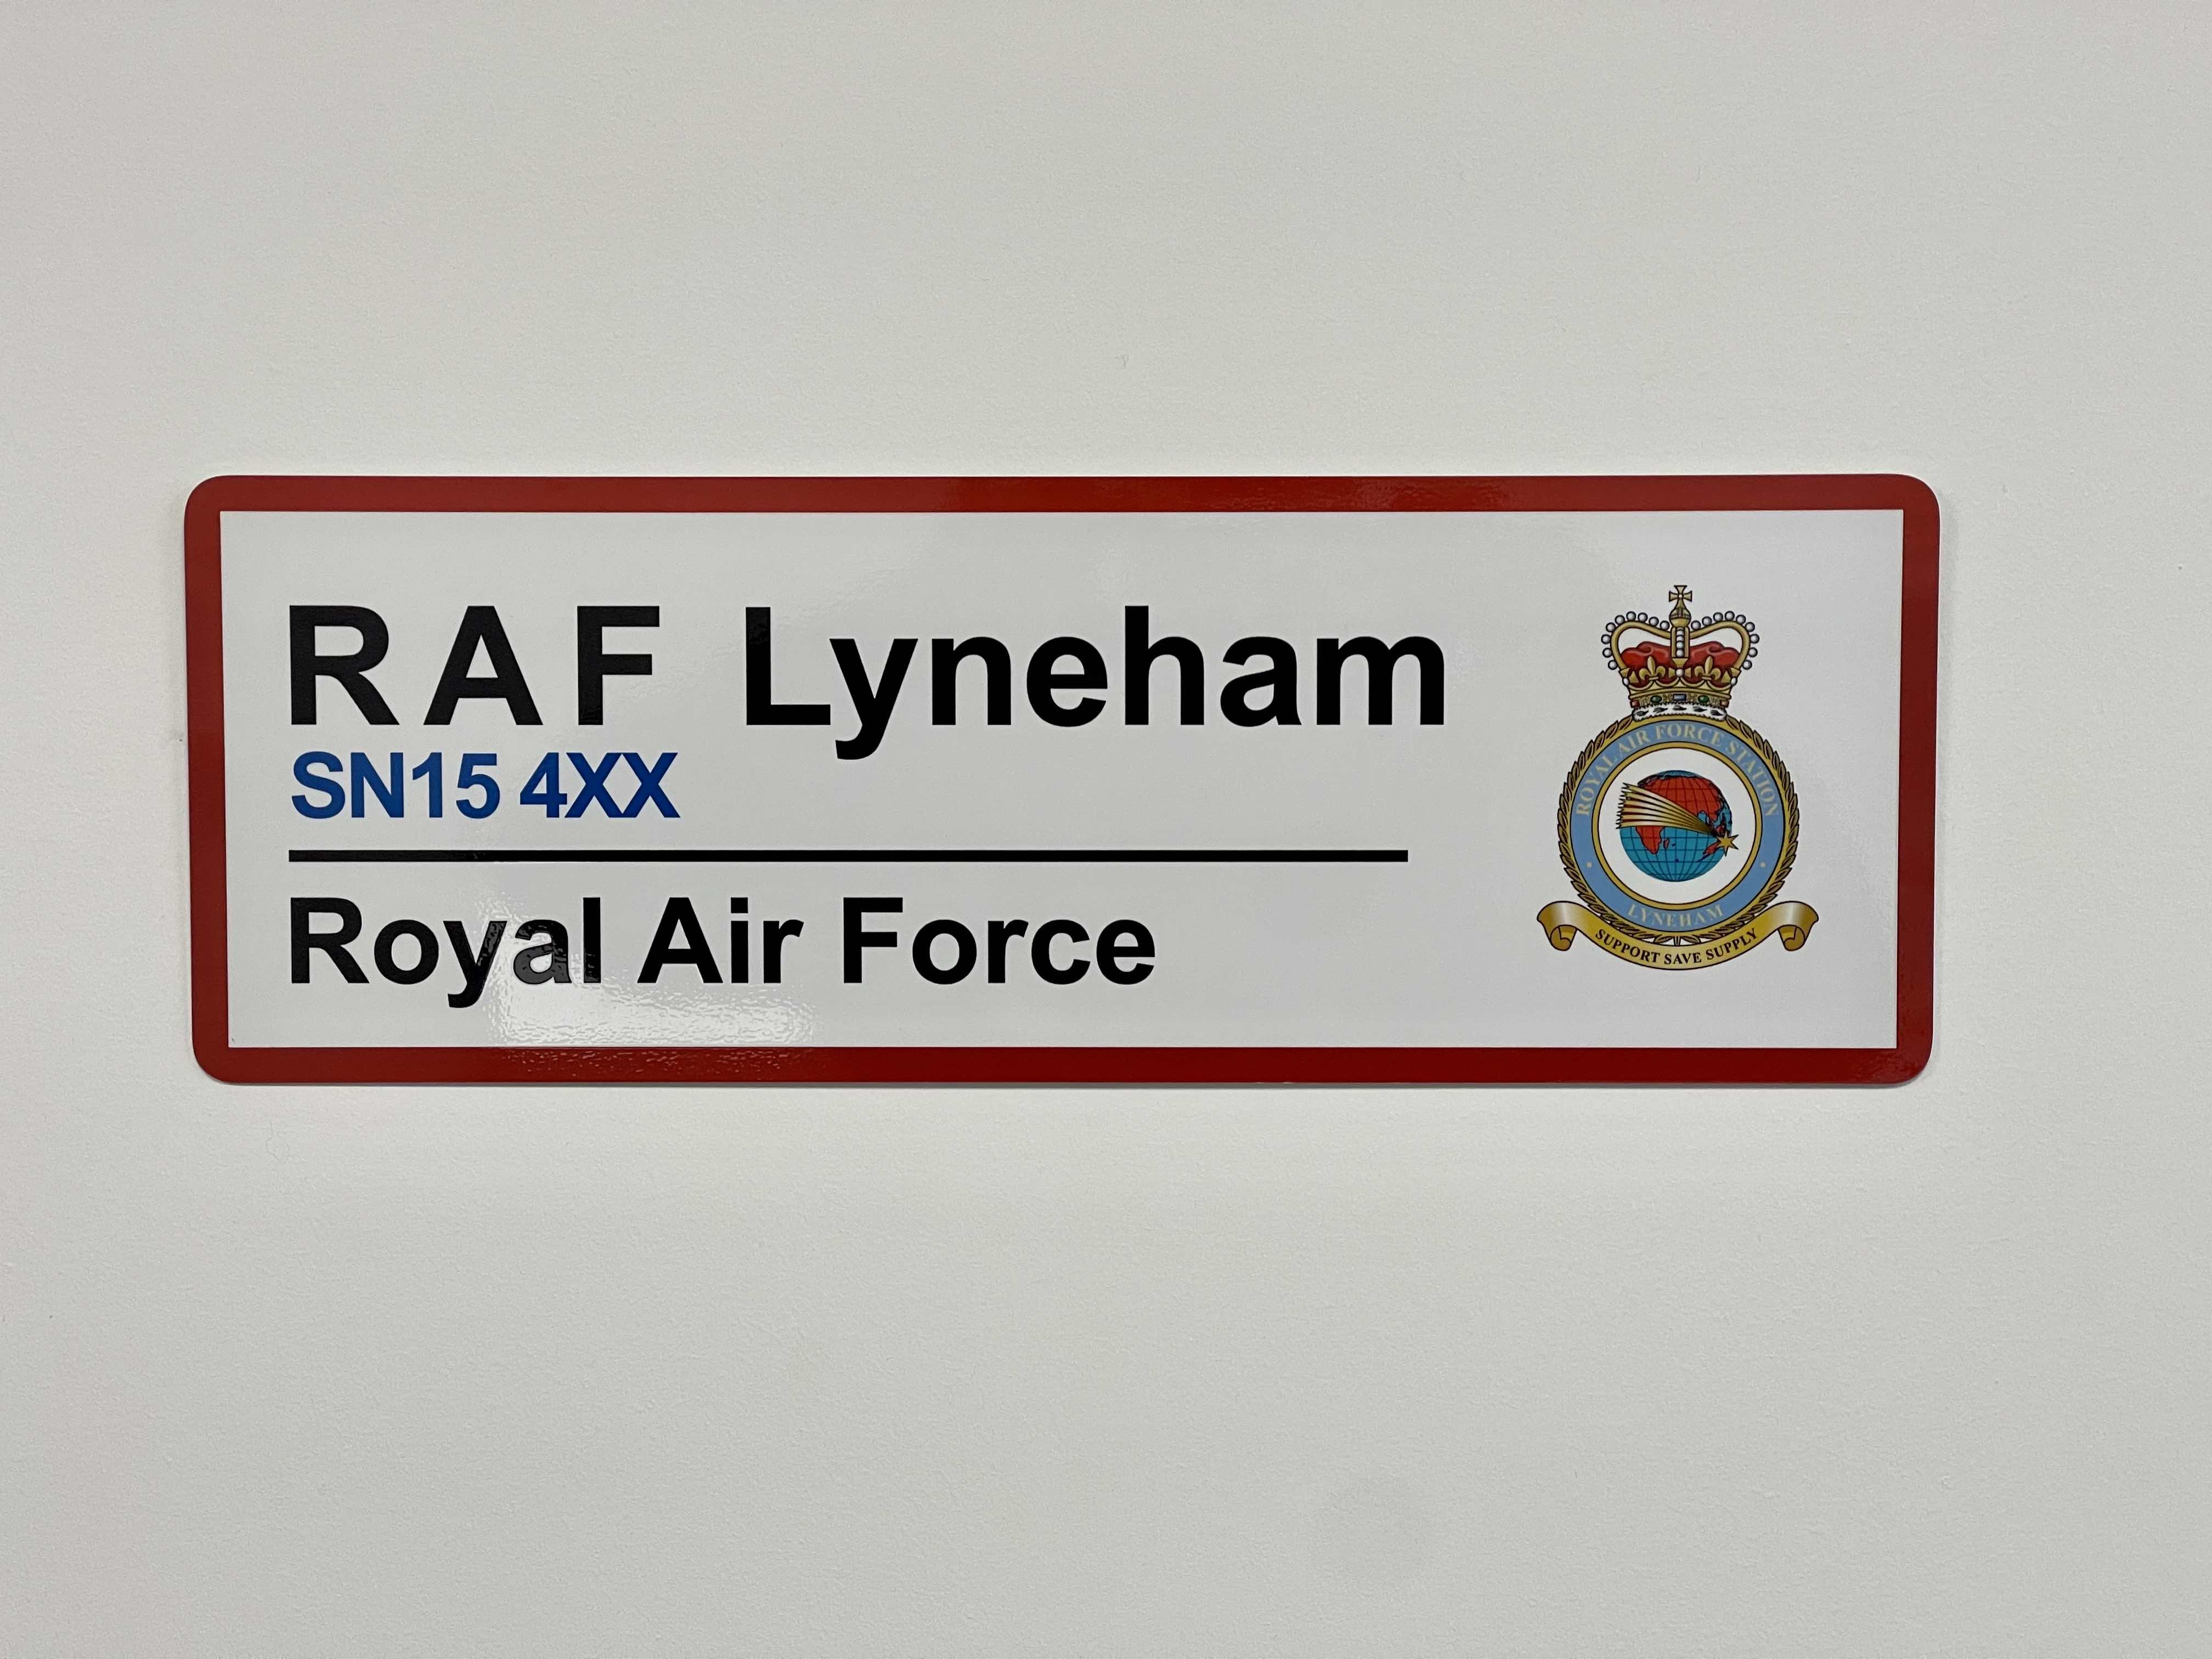 RAF Station Wall Sign